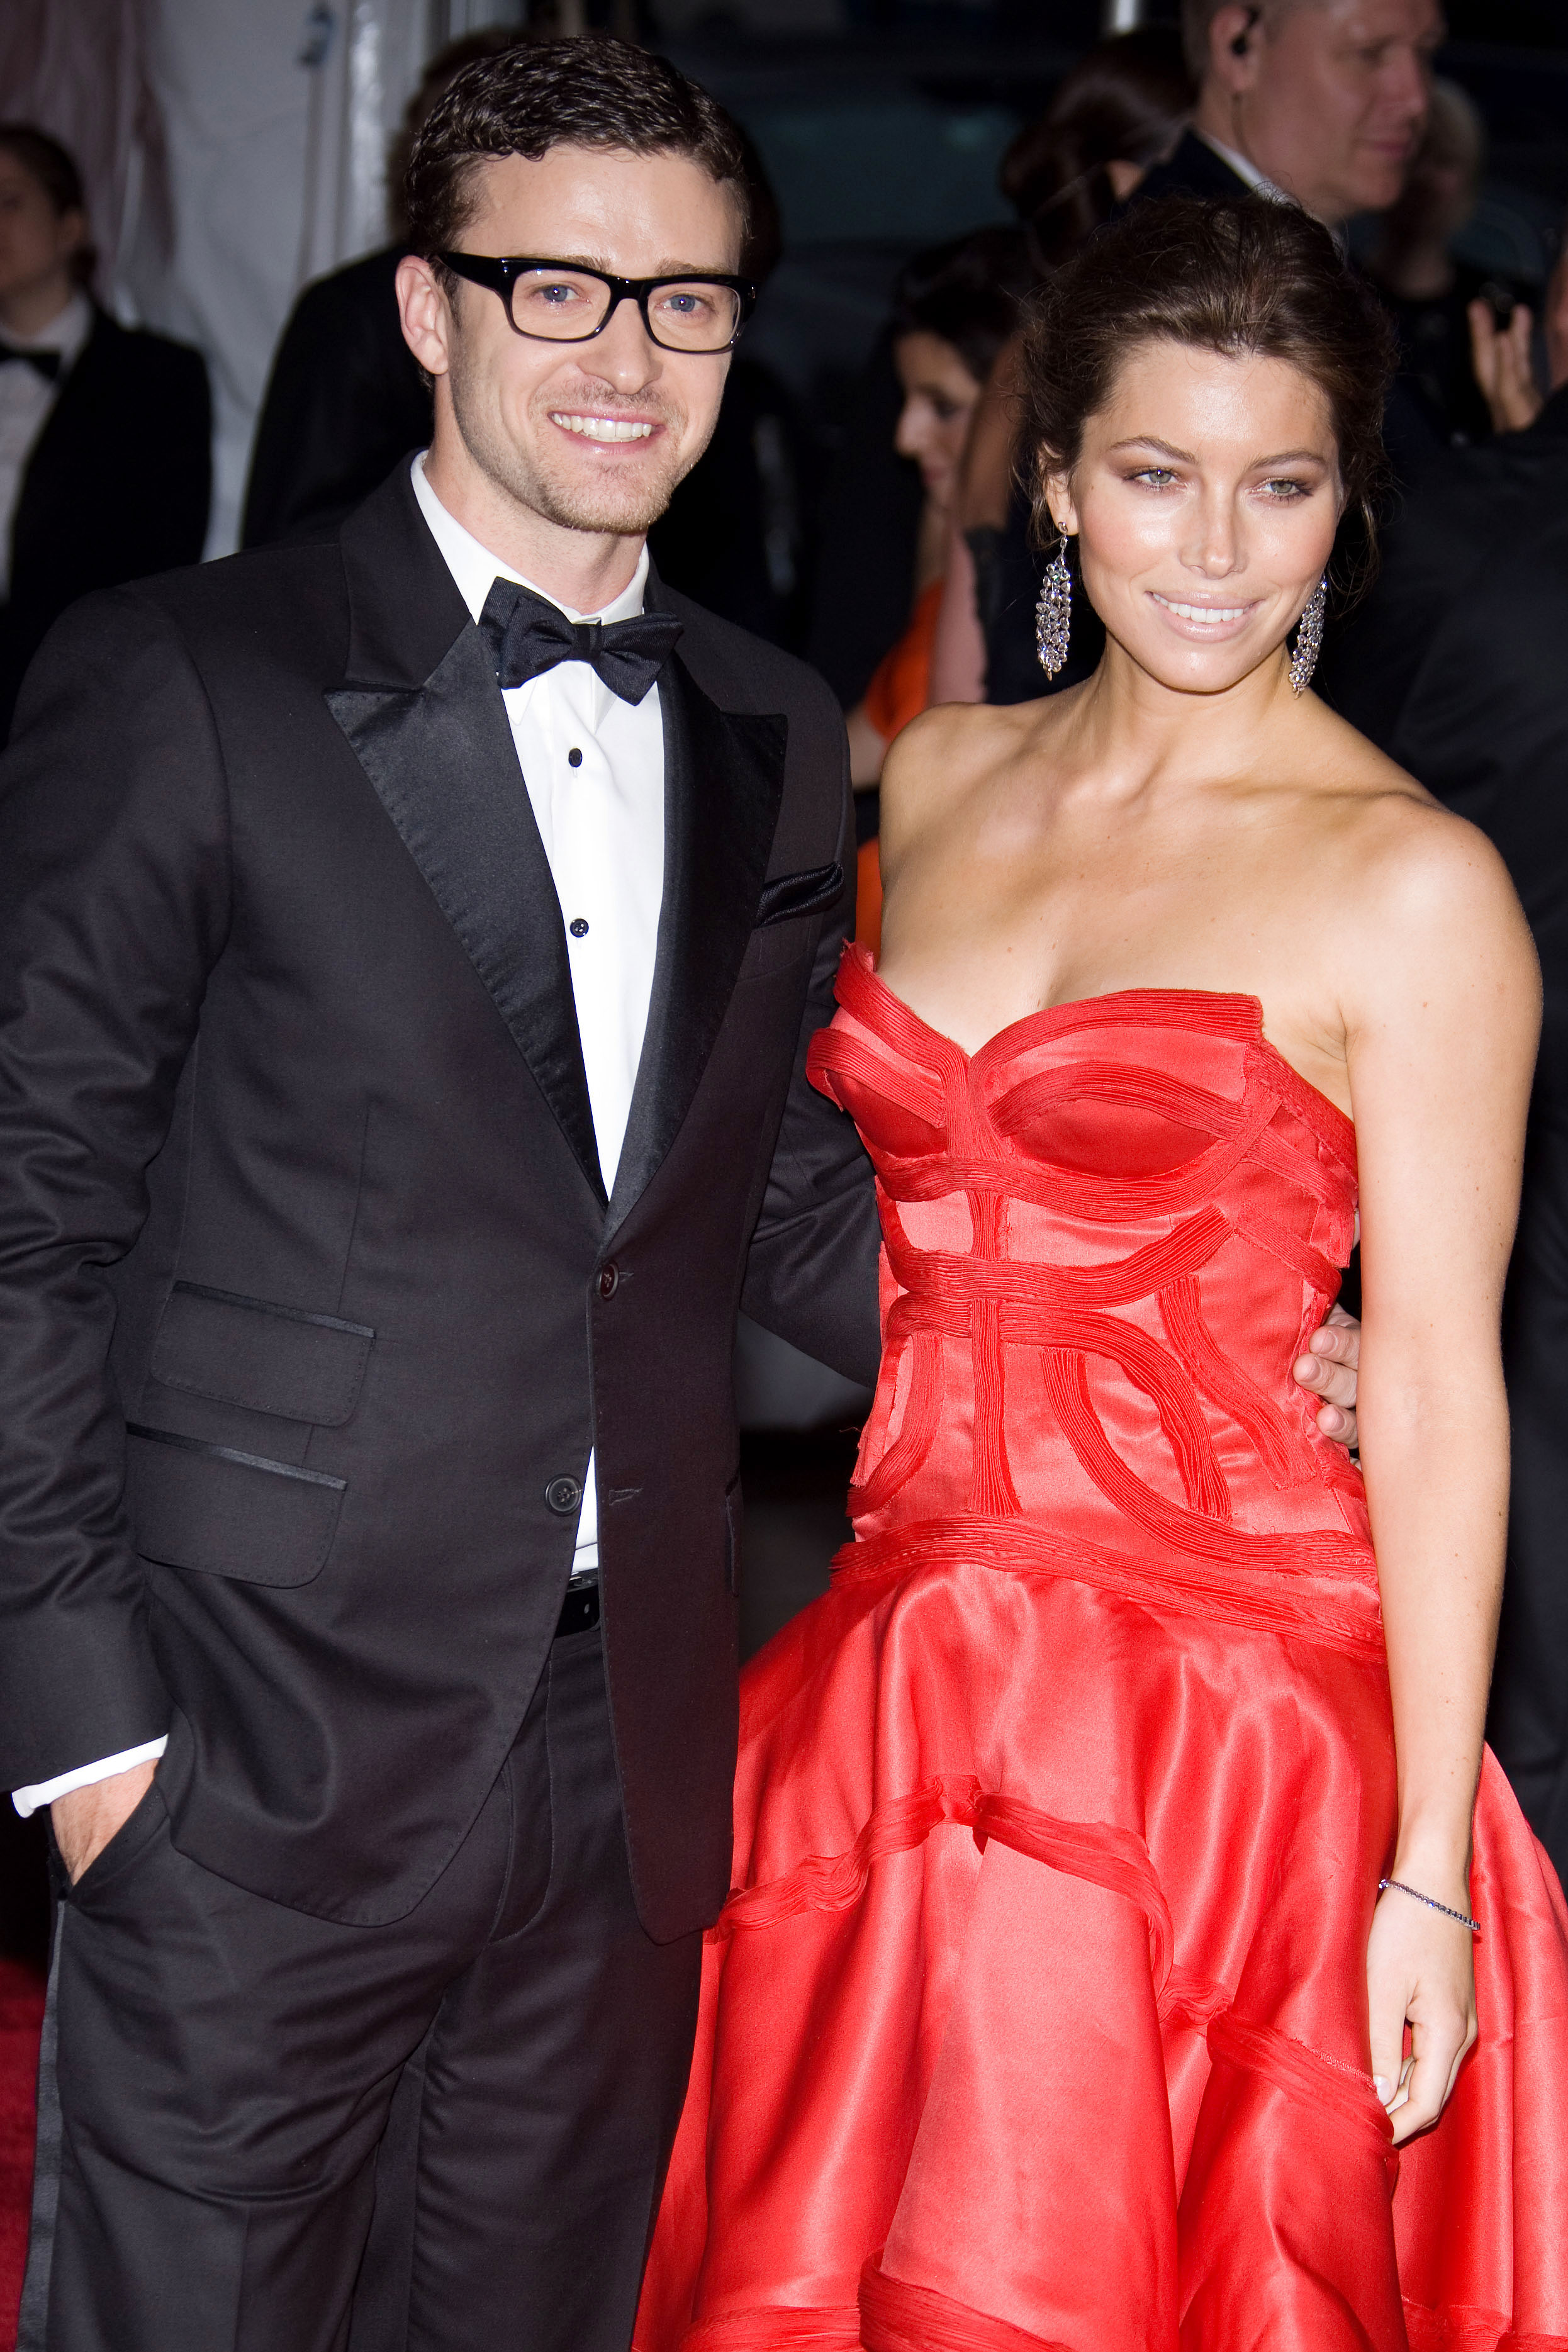 Justin Timberlake tackled at Paris Fashion Week with wife Jessica Biel